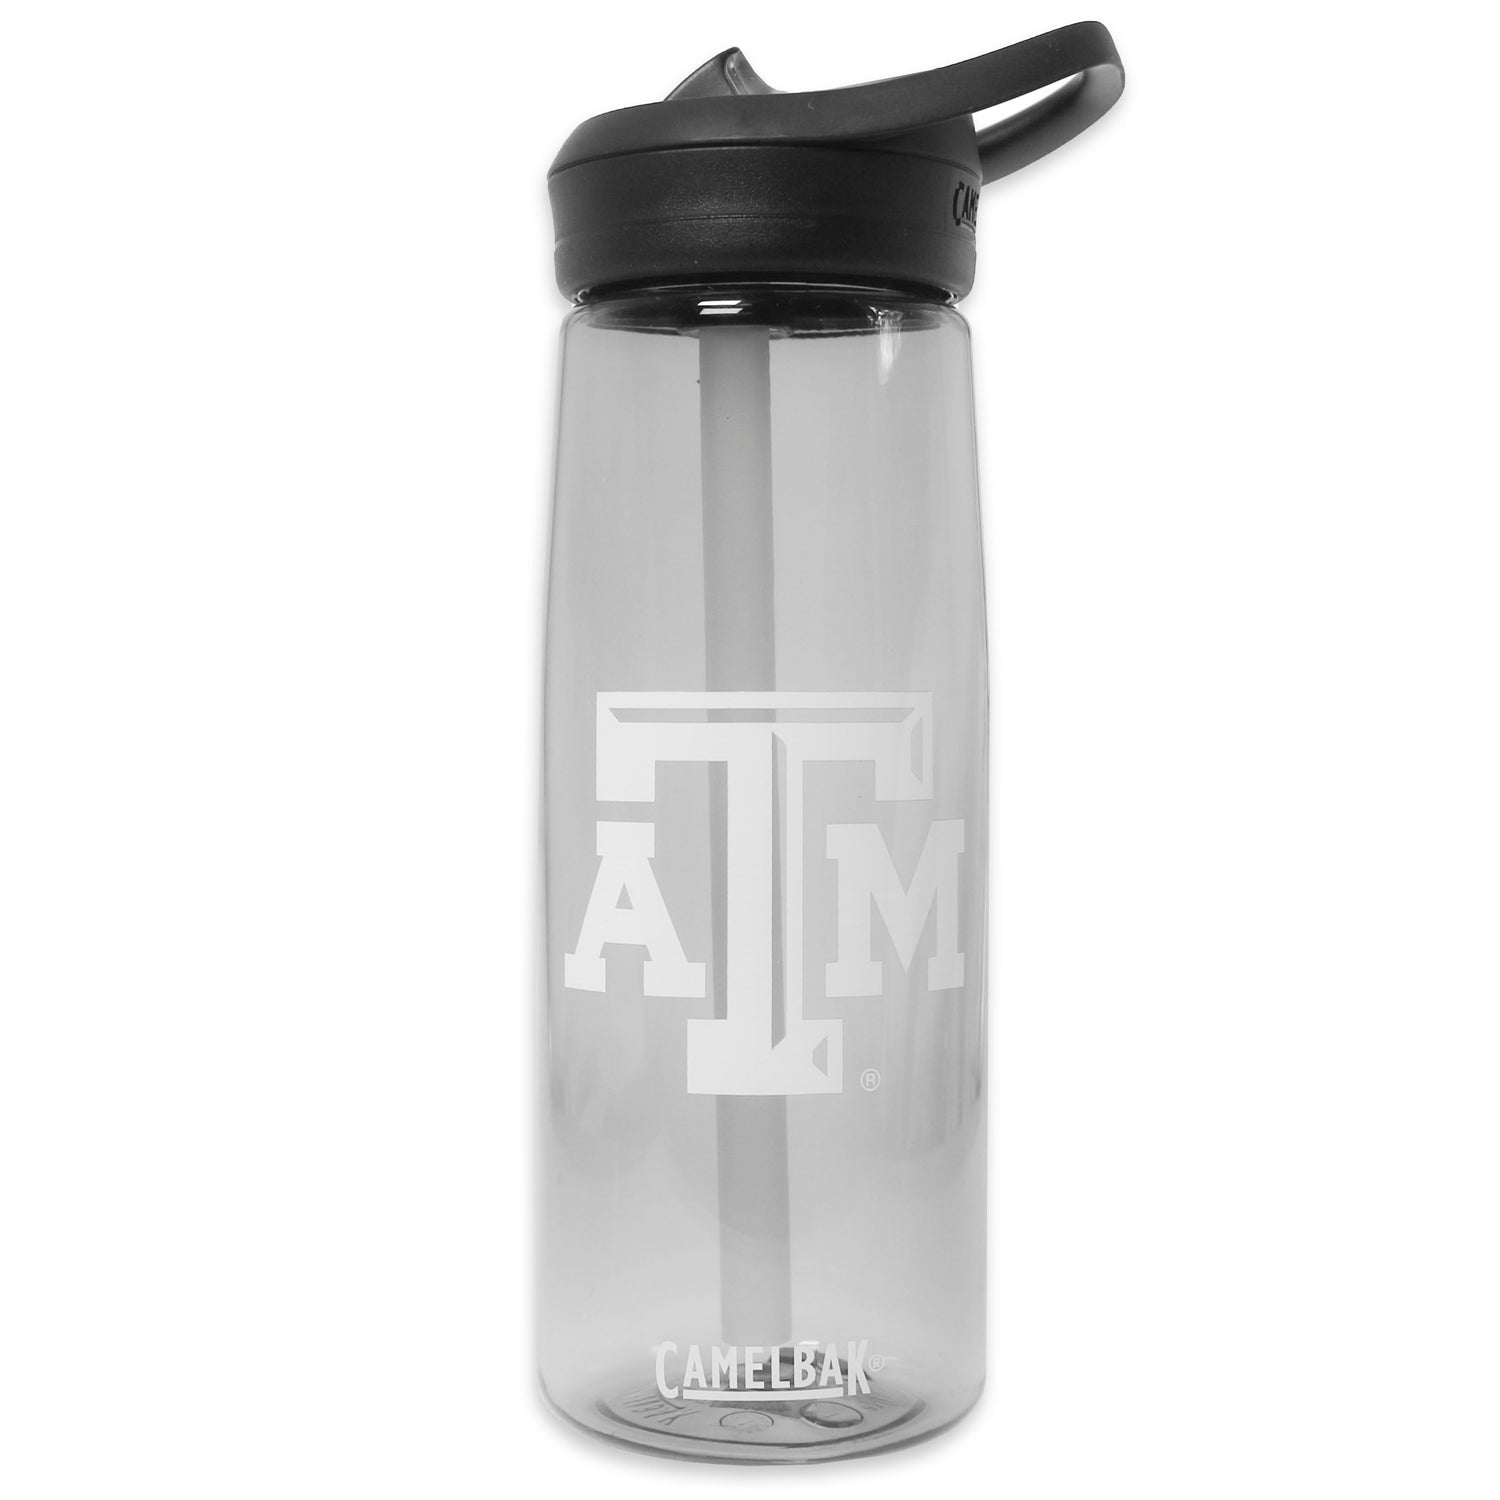 Texas A&M Charcoal CamelBak Water Bottle